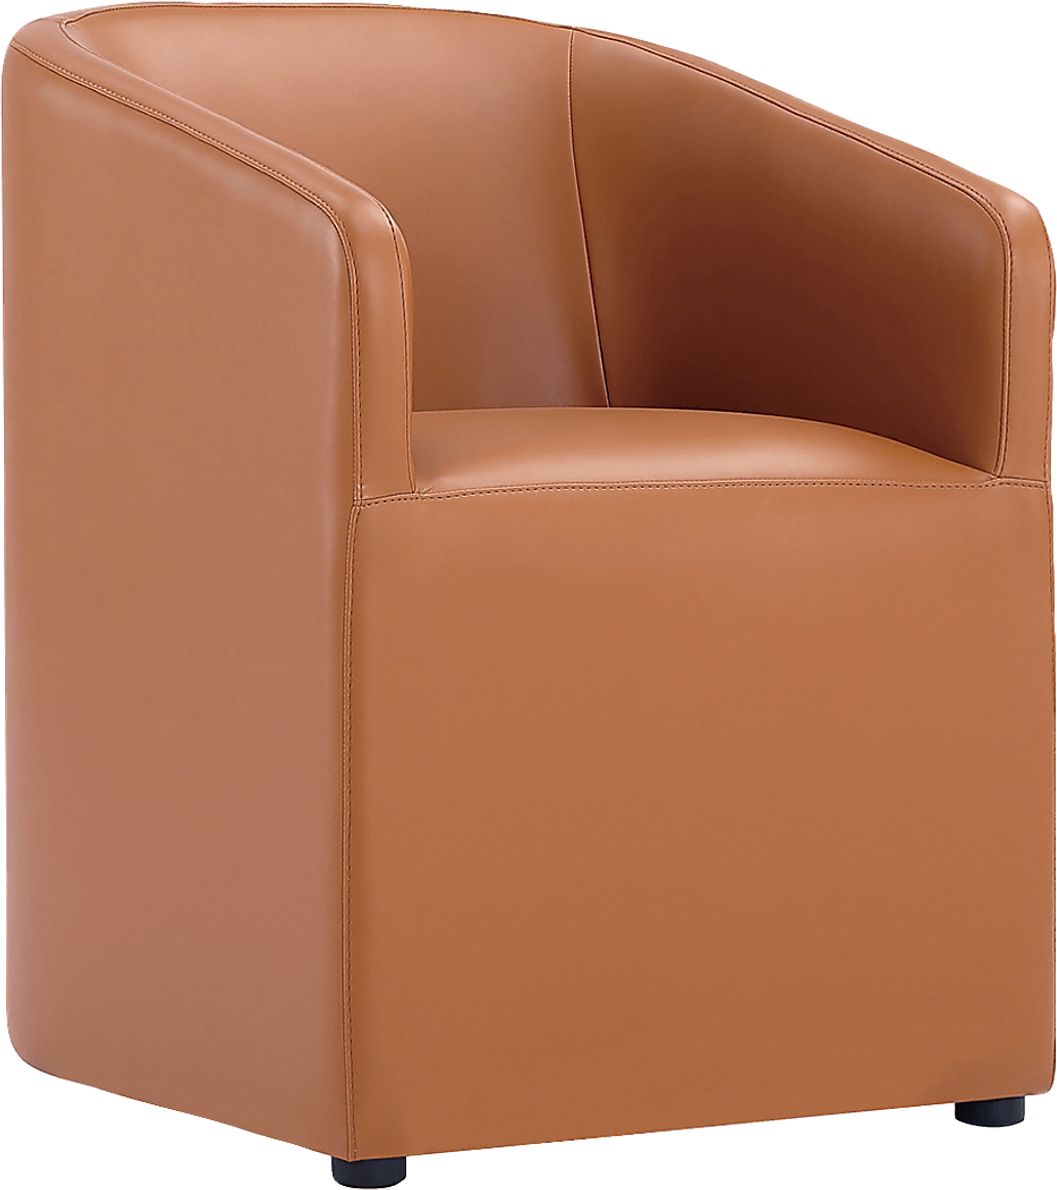 Jonagold III Brown Arm Chair